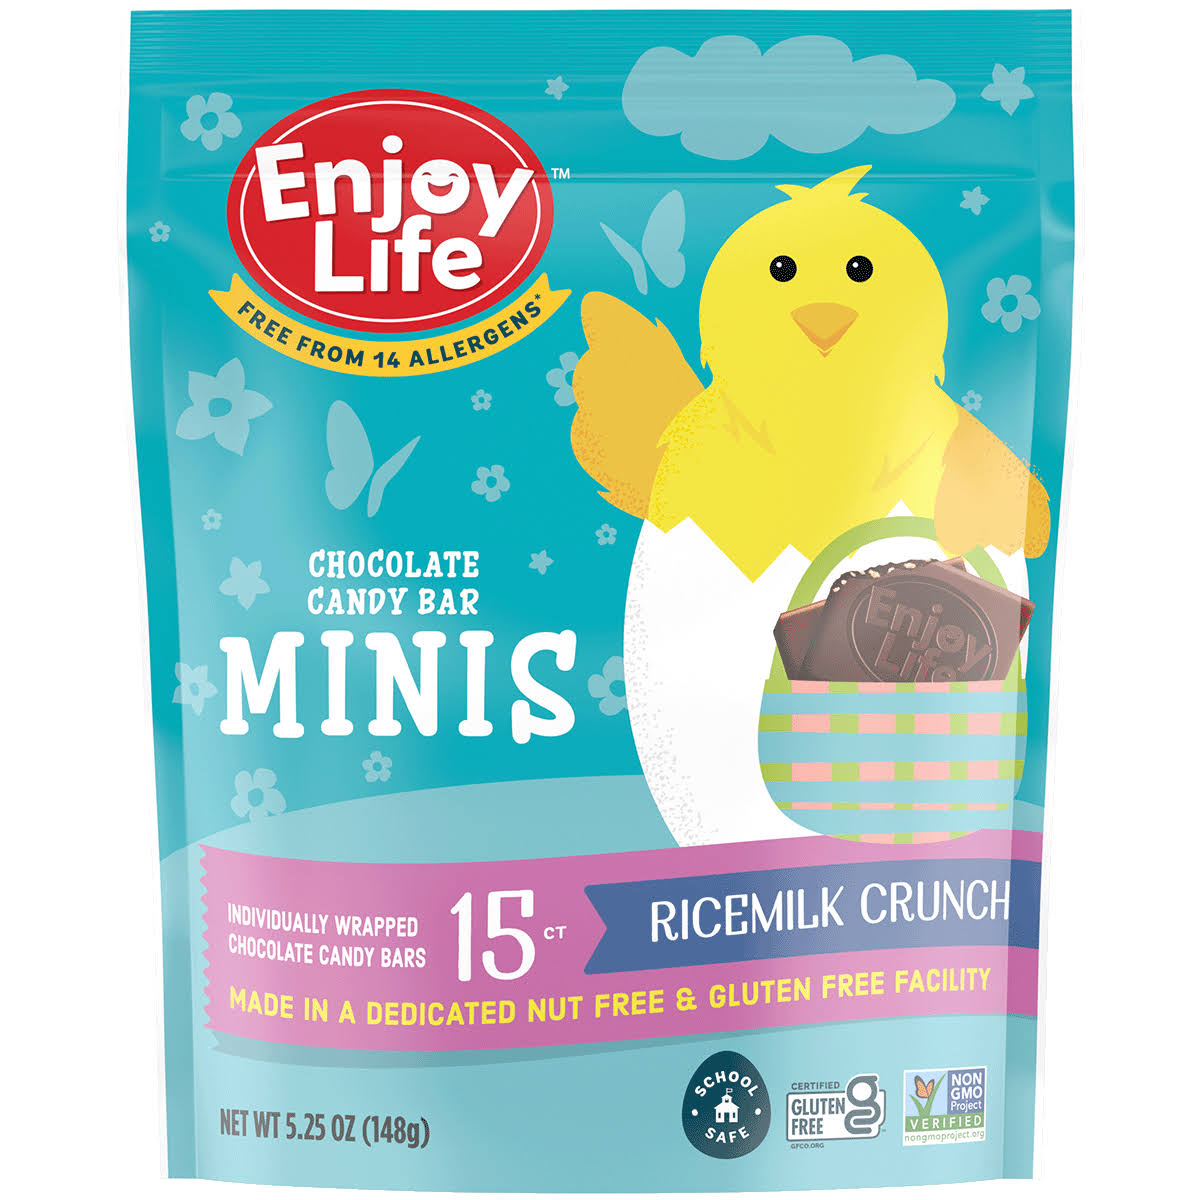 Enjoy Life Chocolate Candy Bars, Ricemilk Crunch, Minis - 15 bars, 5.25 oz